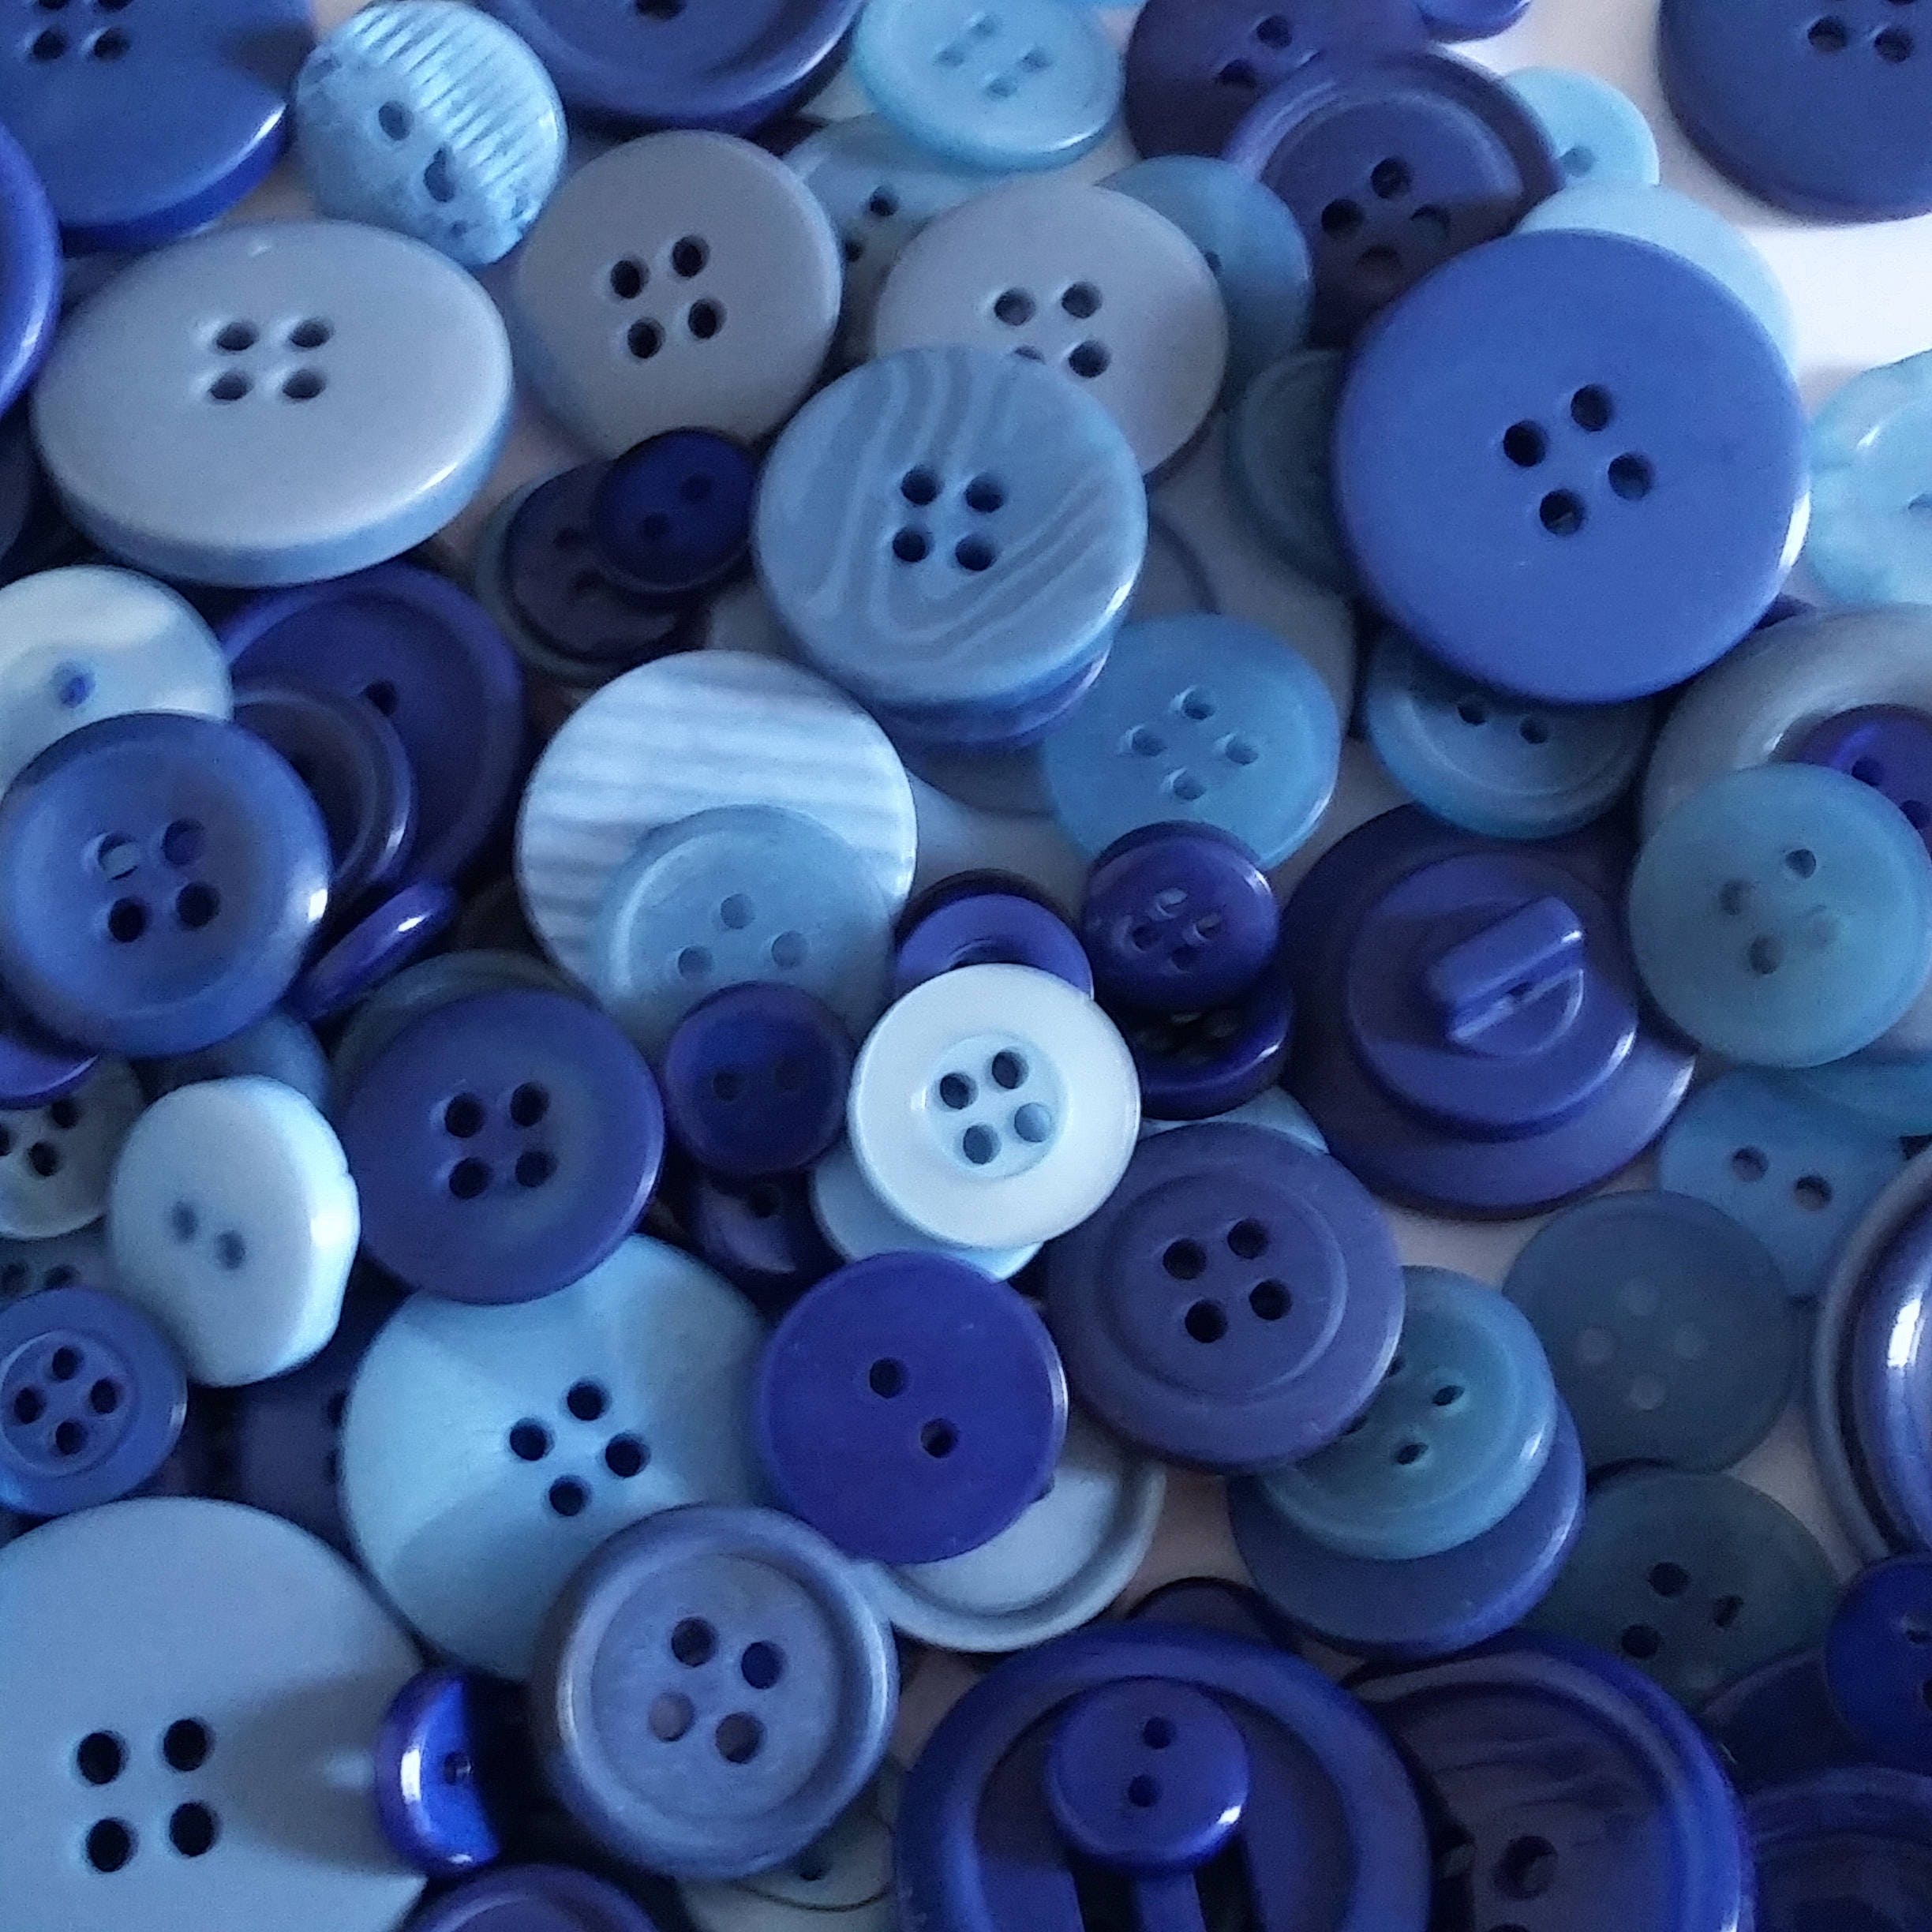 Blue Button Mix Assorted Buttons Craft Buttons Sewing